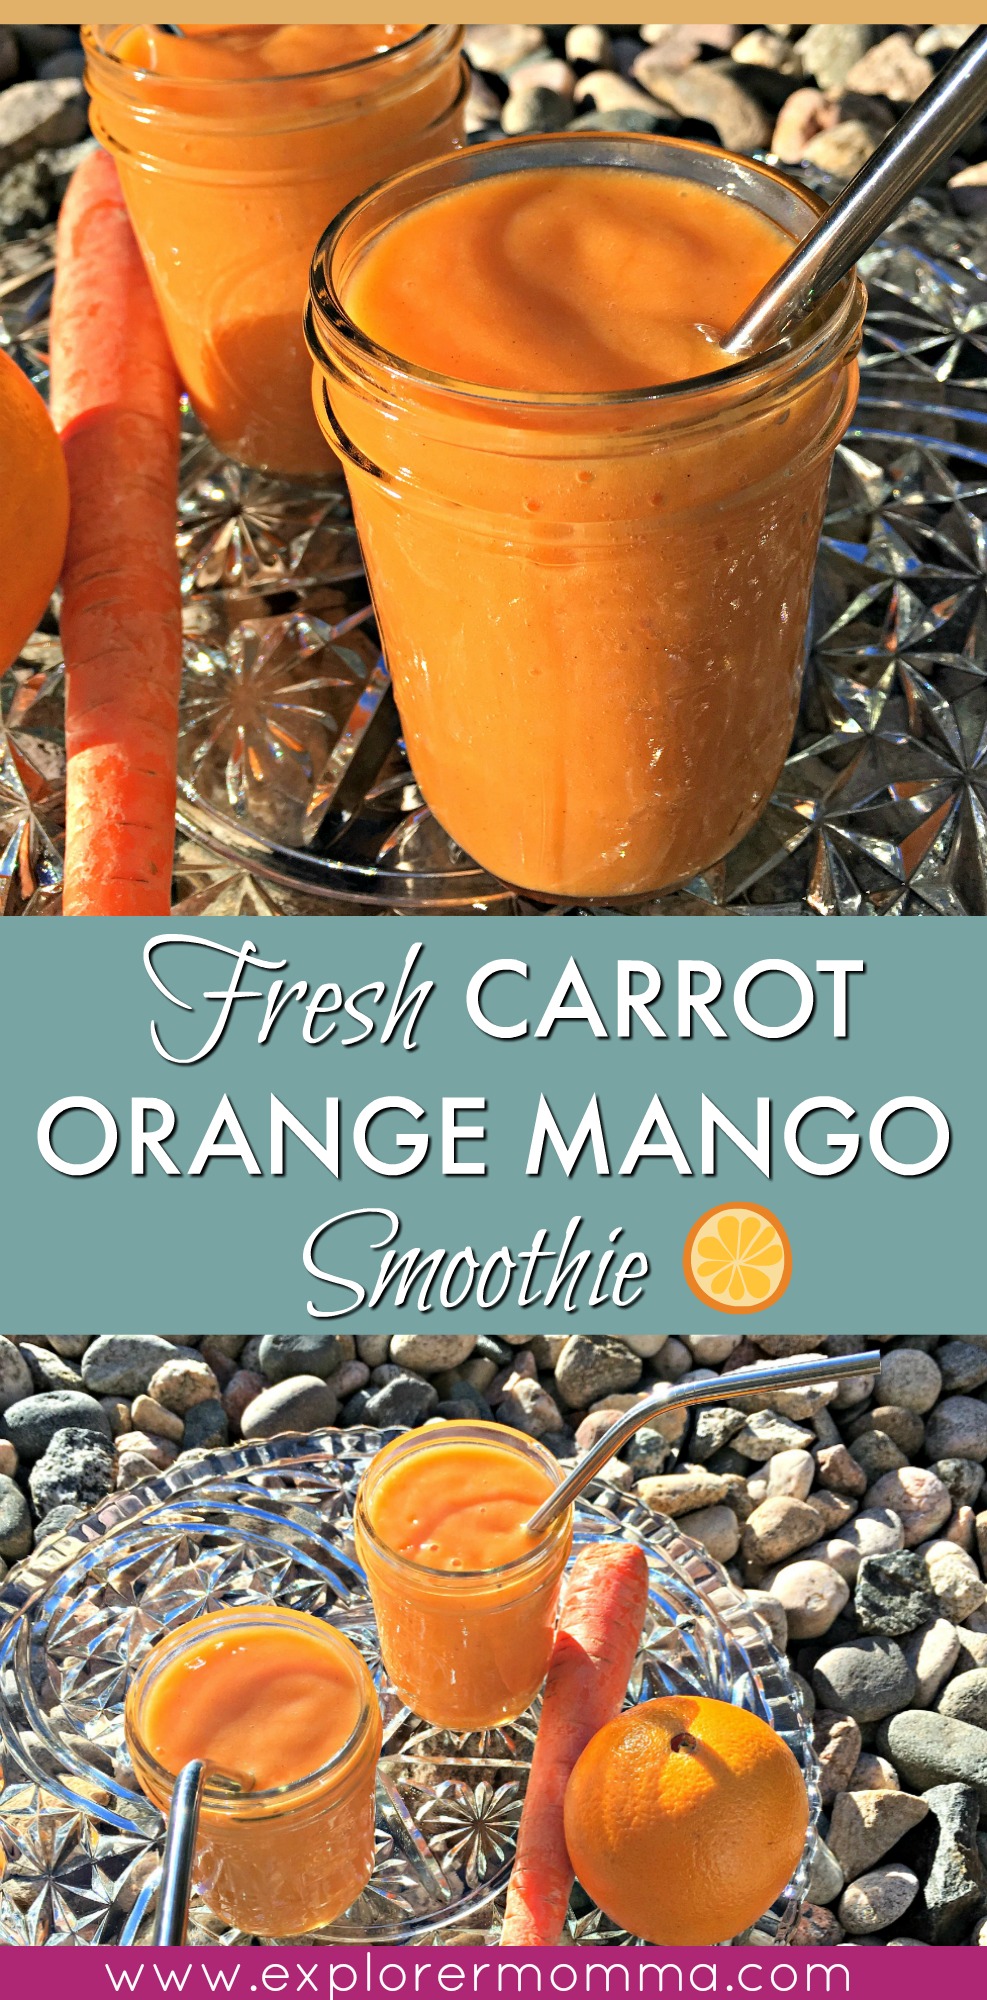 Carrot orange mango smoothie